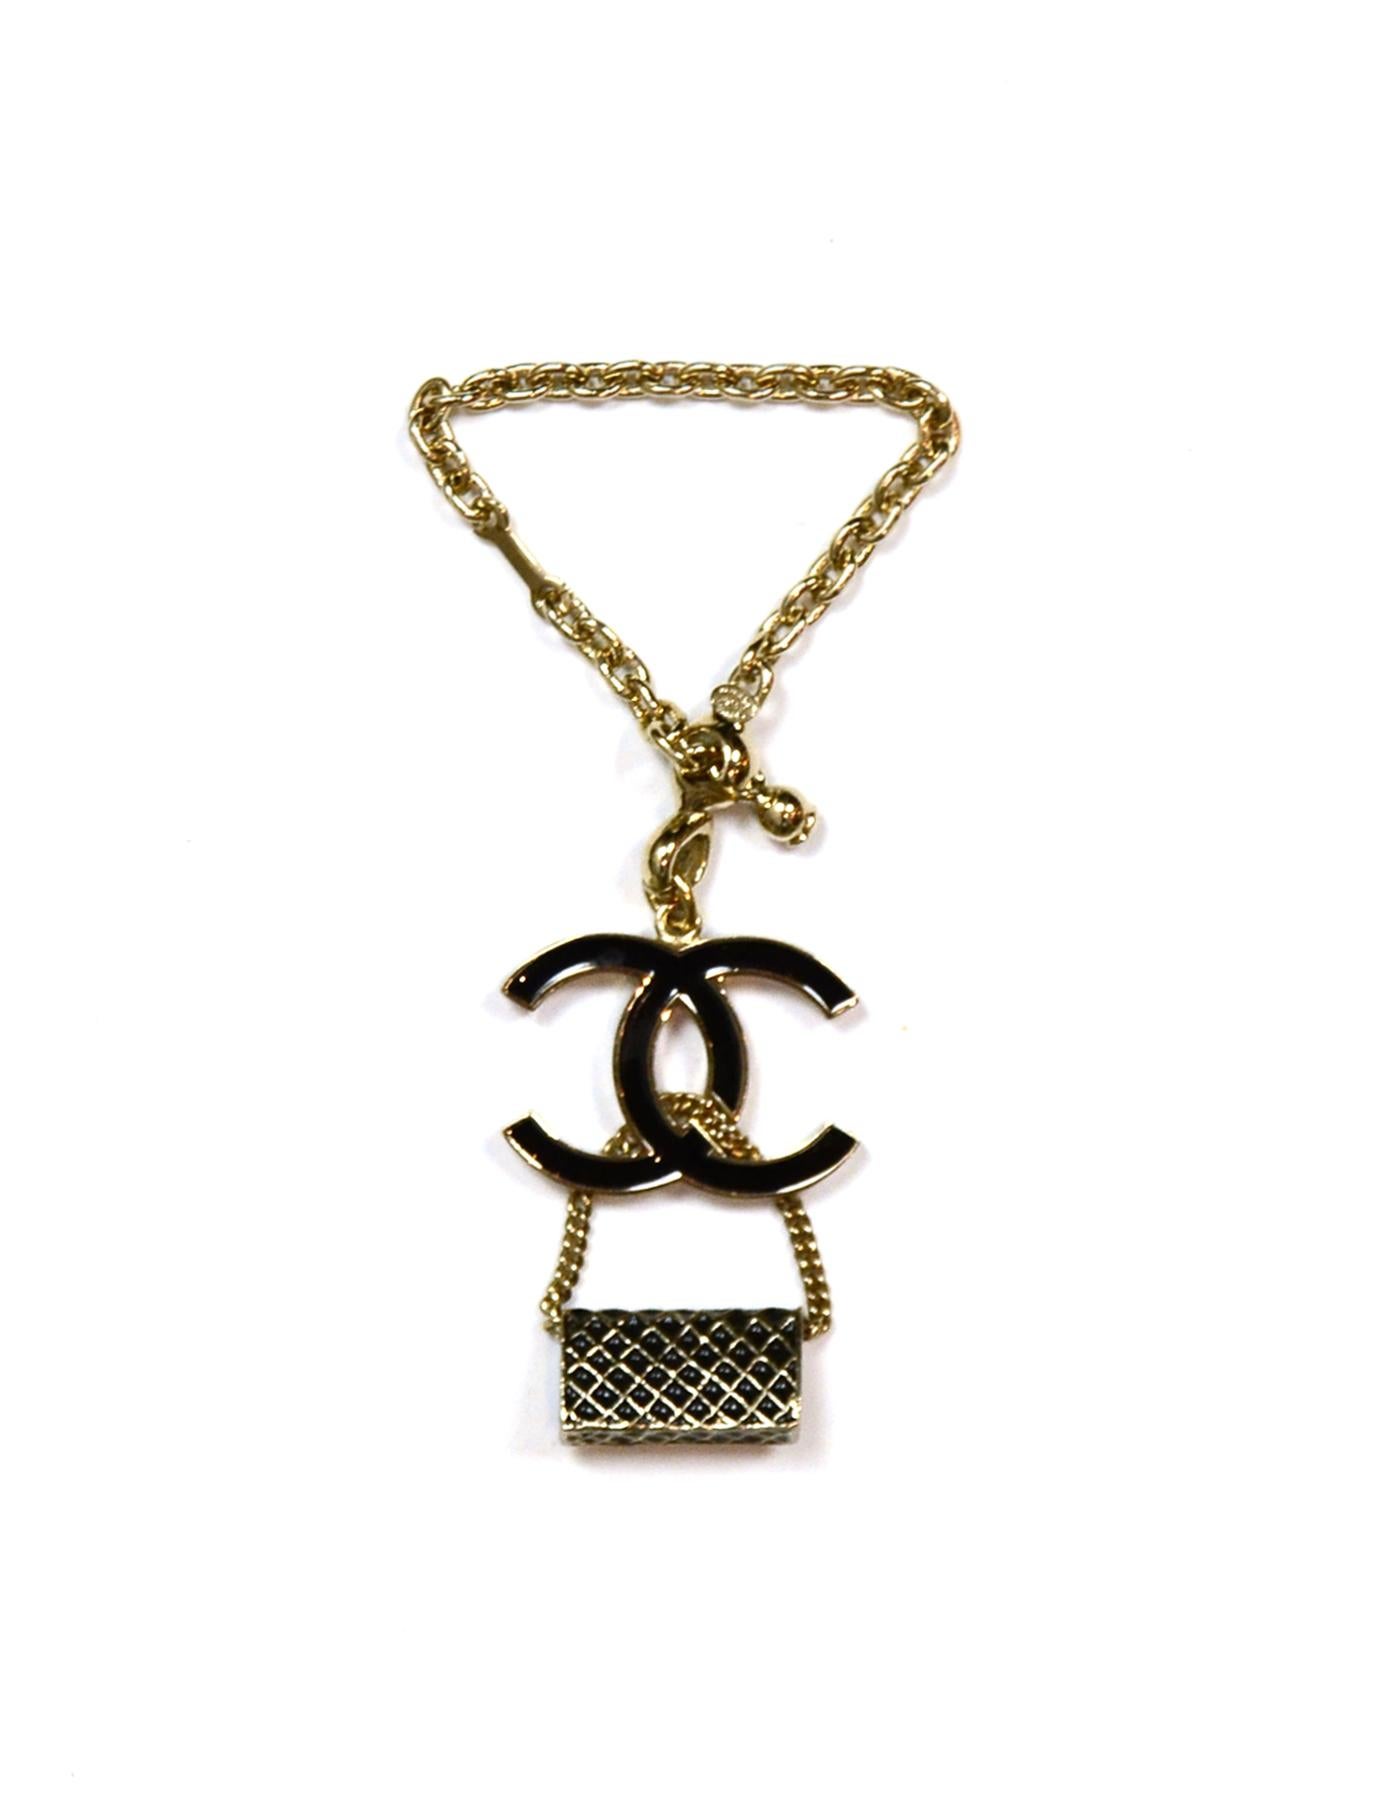 Chanel Black Enamel Goldtone CC & Flap Bag Keychain Bag Charm

Made In: Italy
Year of Production: 2007
Color: Light goldtone, Black
Materials: Enamel, Metal
Hallmarks: 